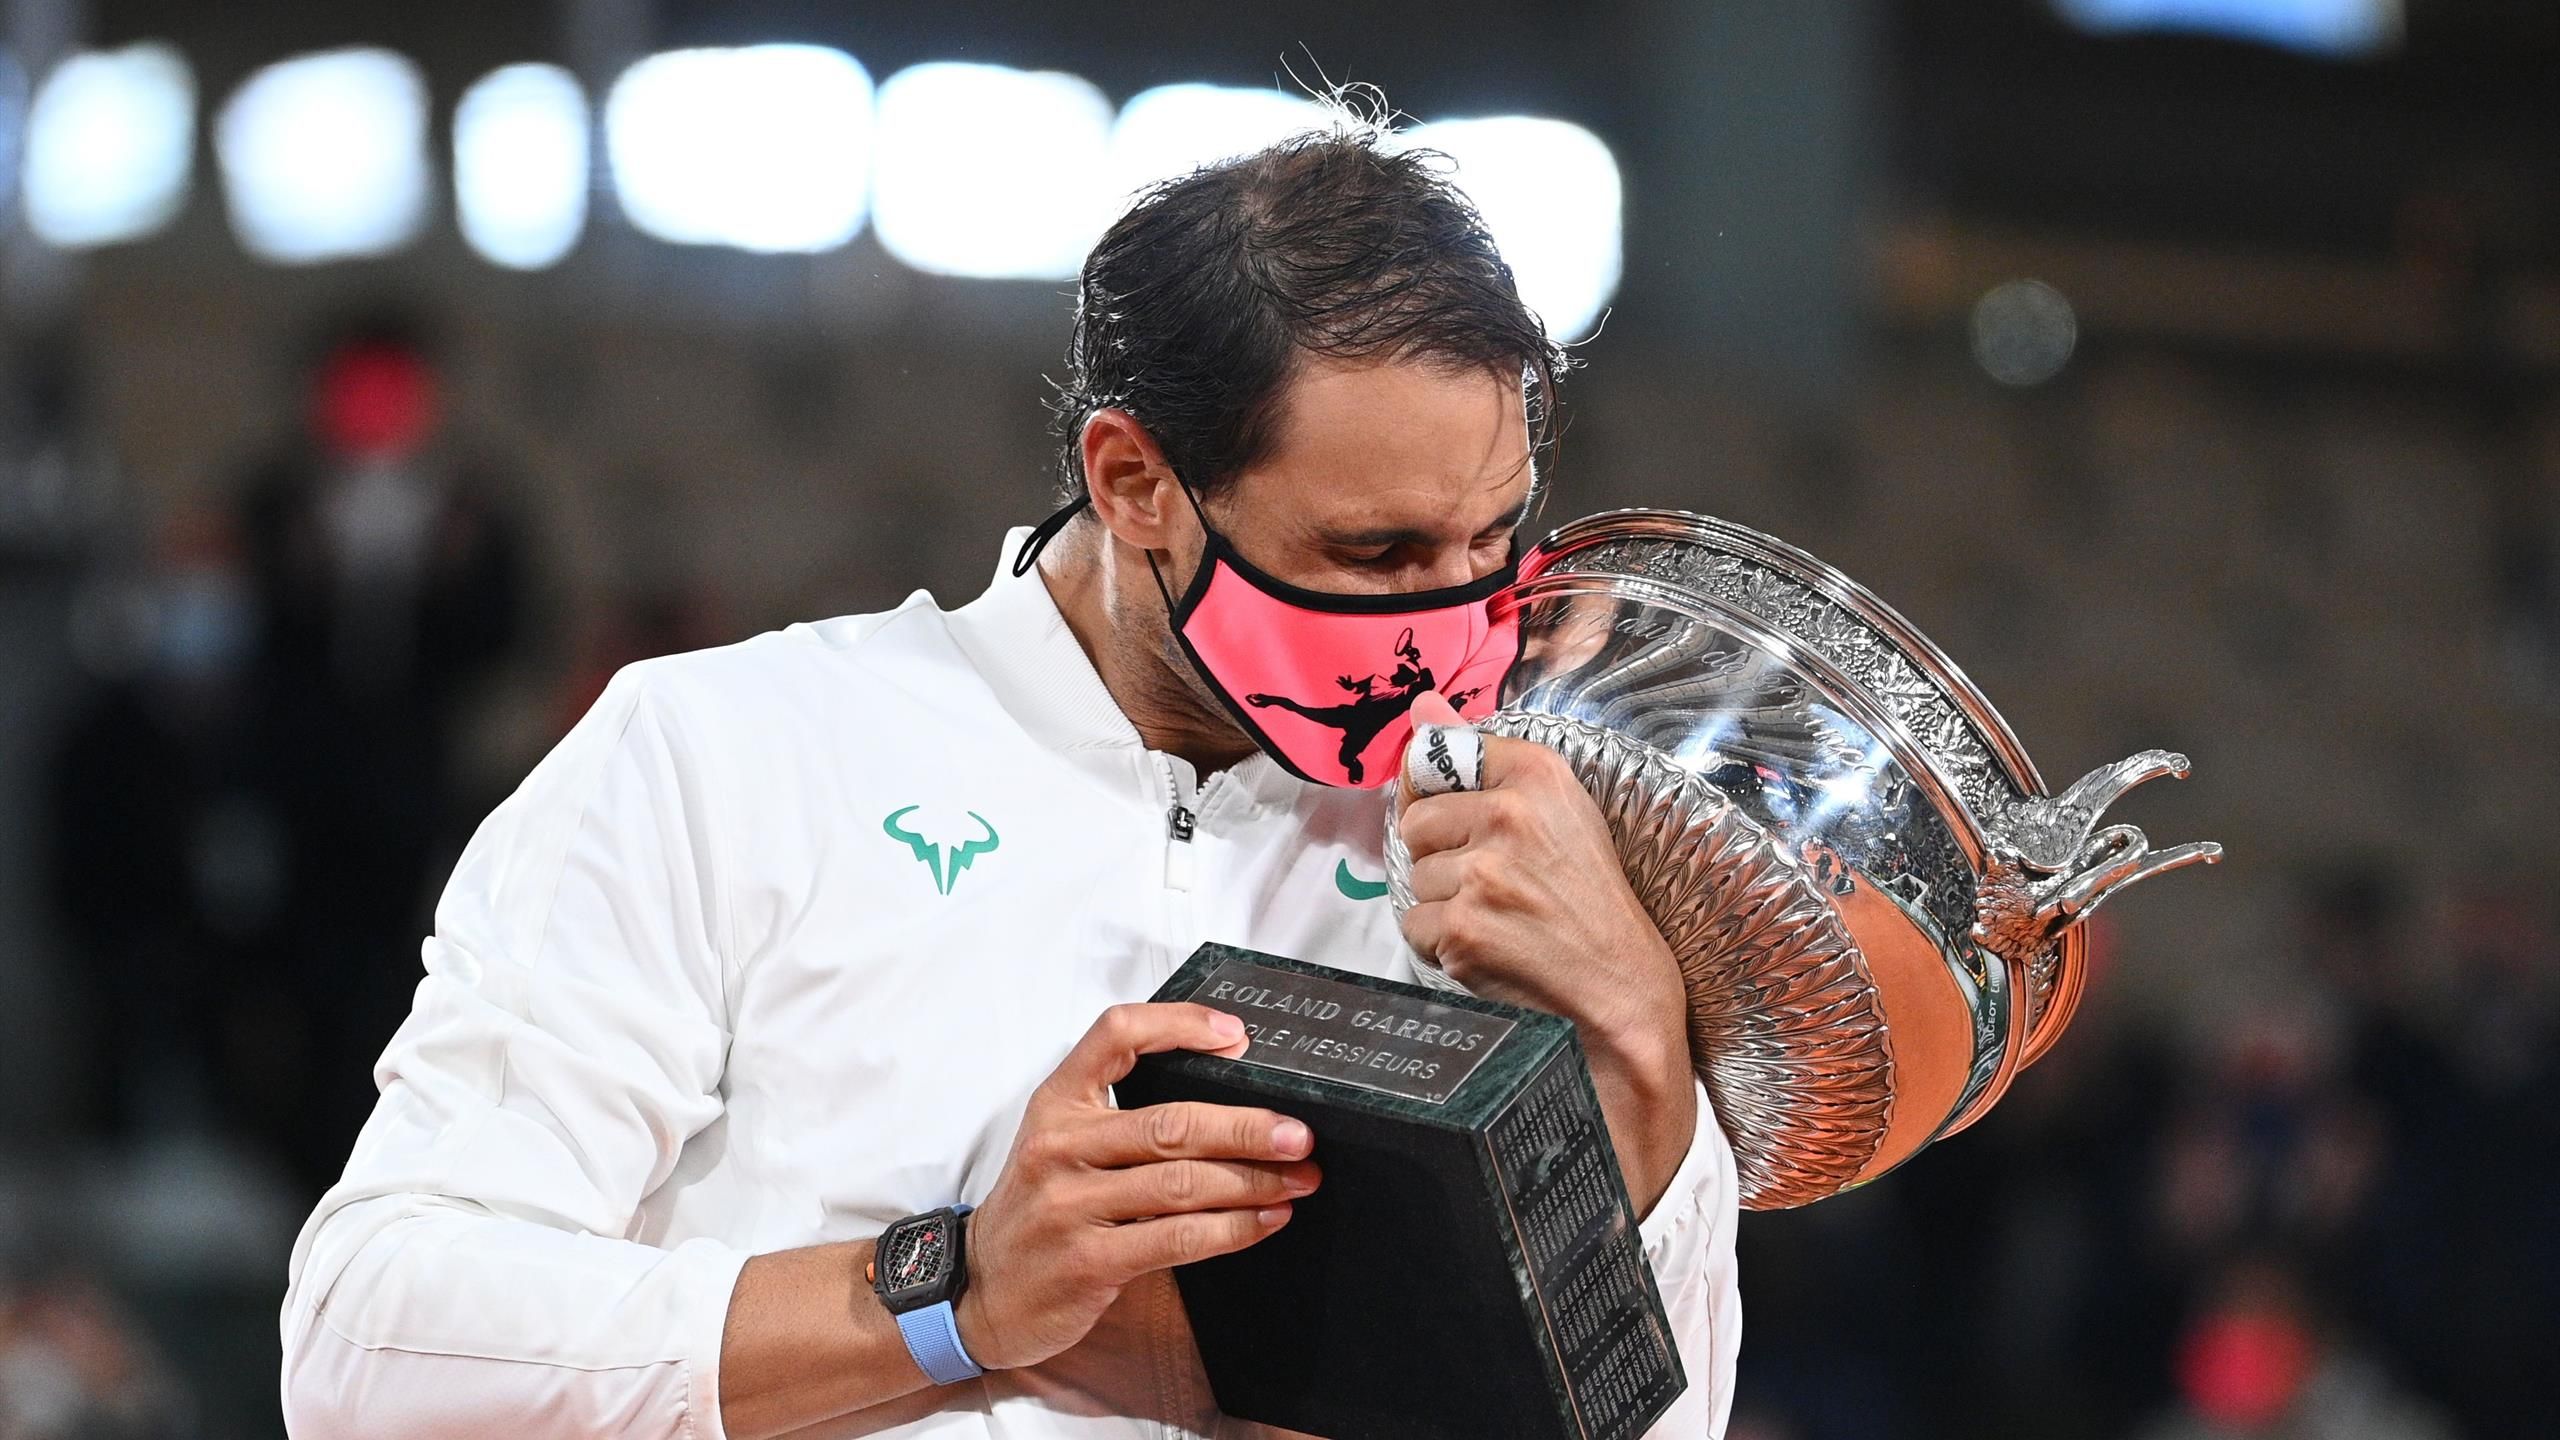 Rafael Nadal downs Novak Djokovic to win 13th French Open and 20th Grand Slam